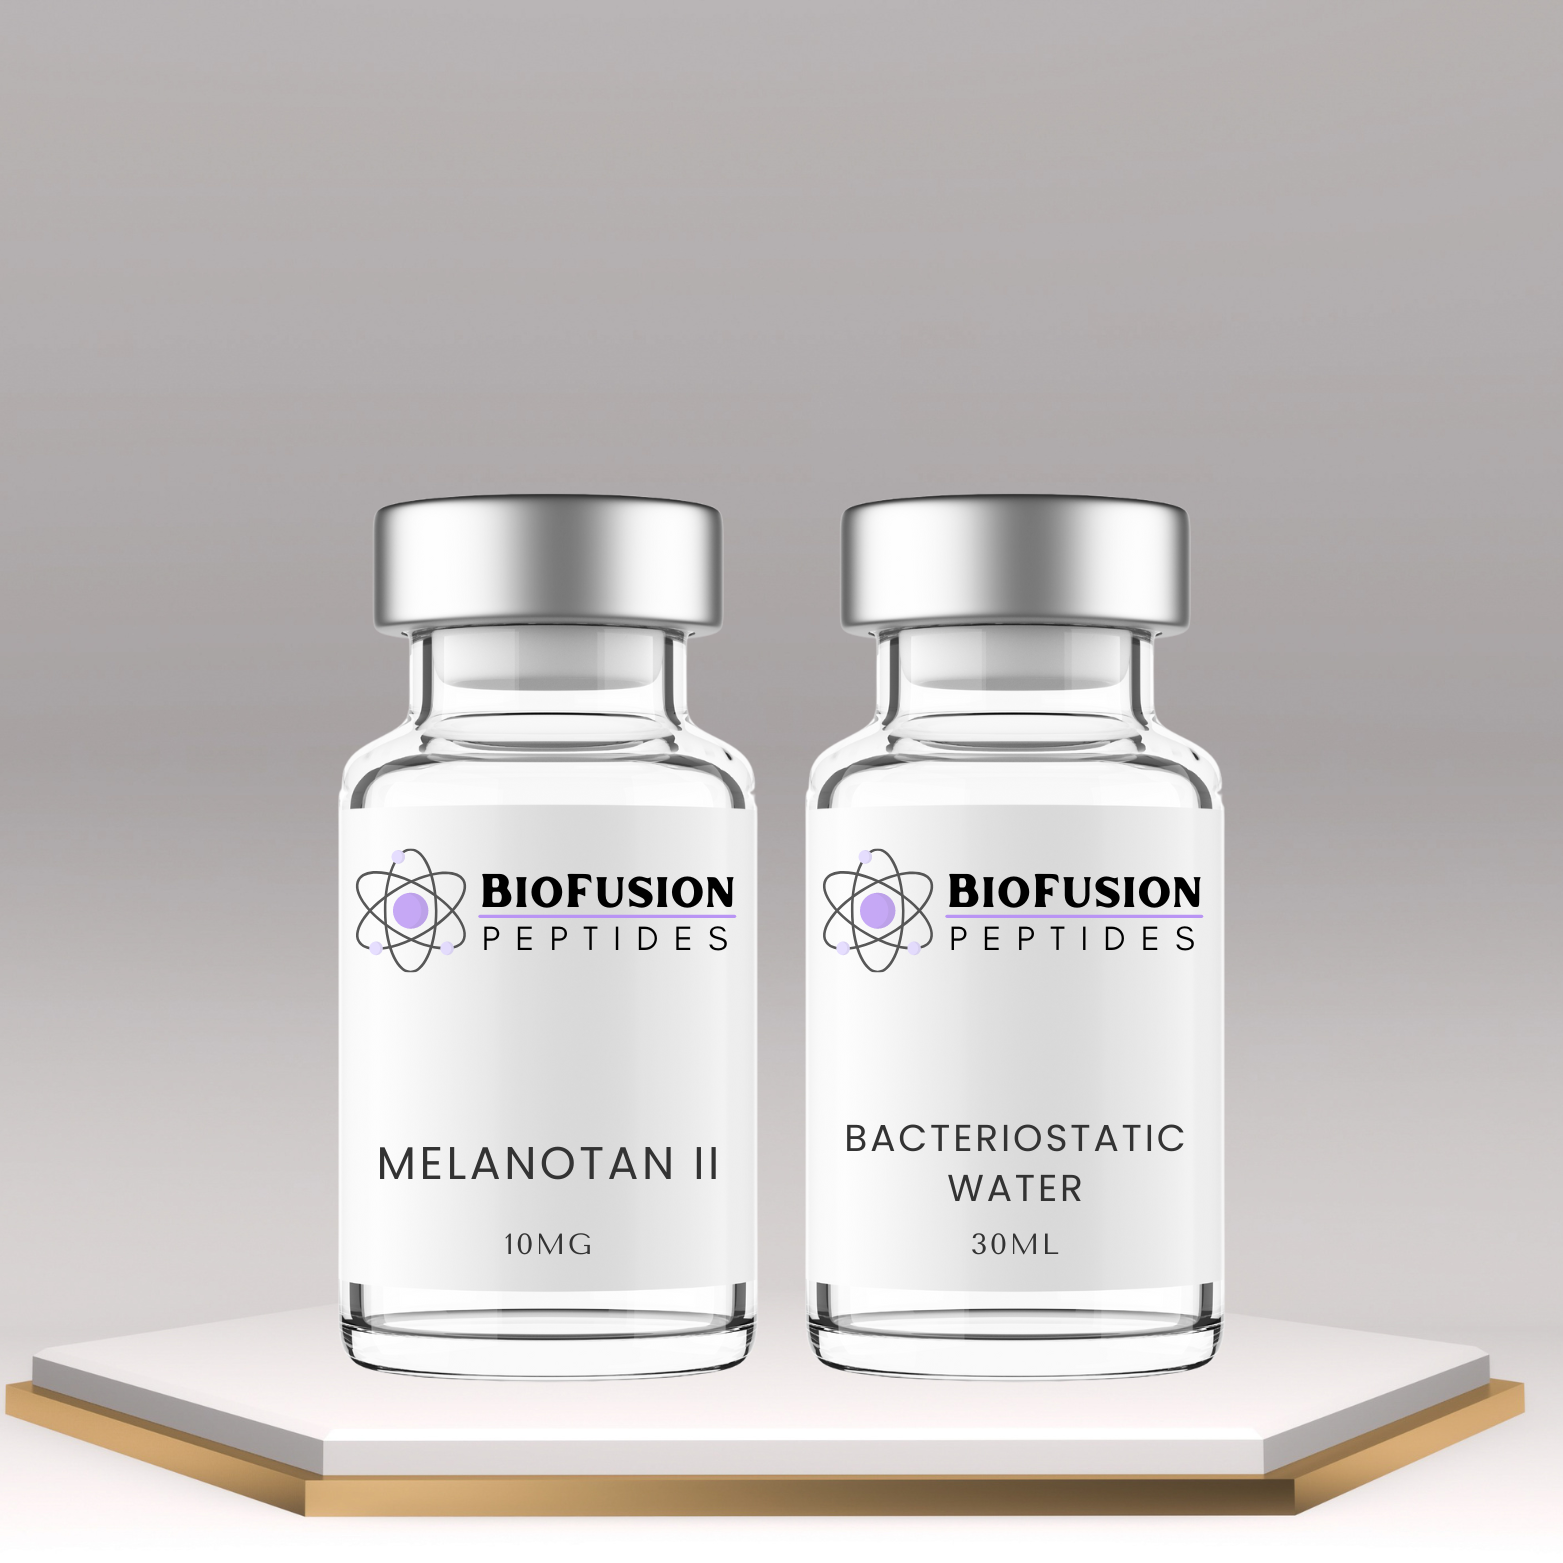 BioFusion Peptides Melanotan II kit with bacteriostatic water